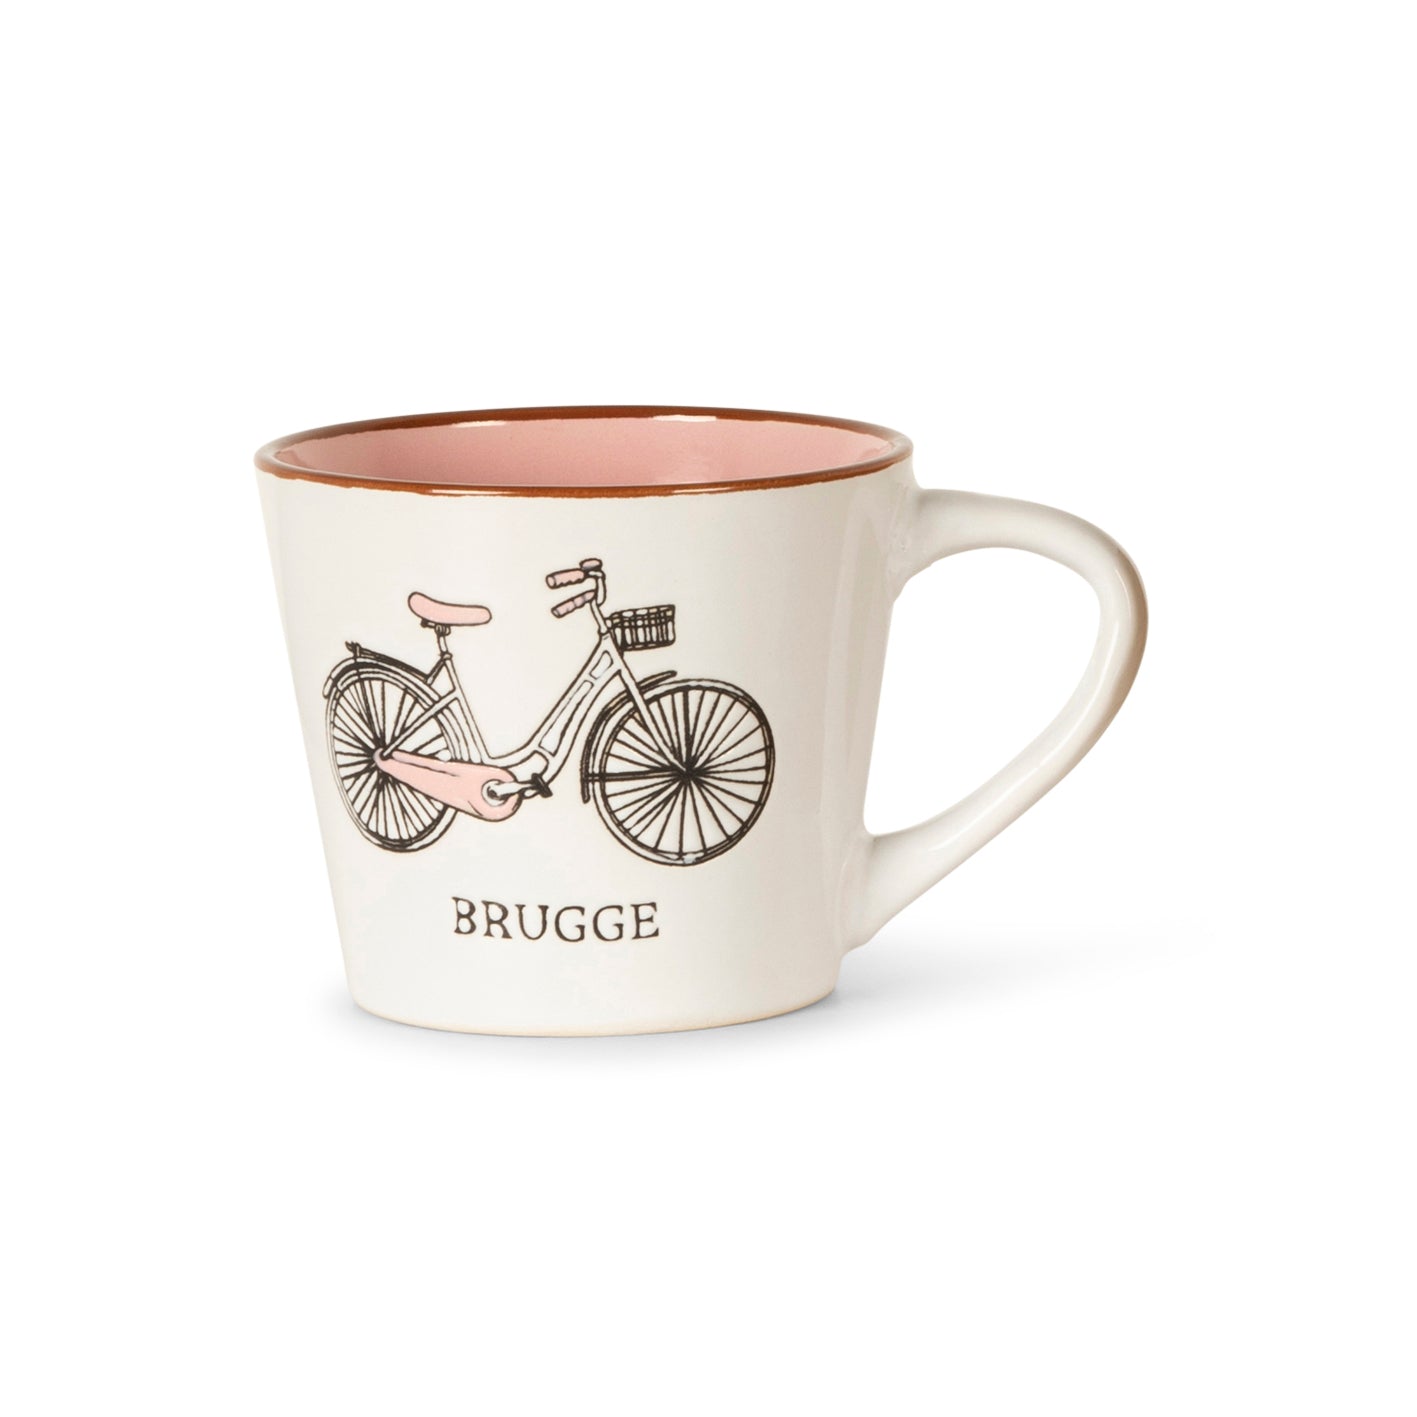 Silk mug - Brugge - bike